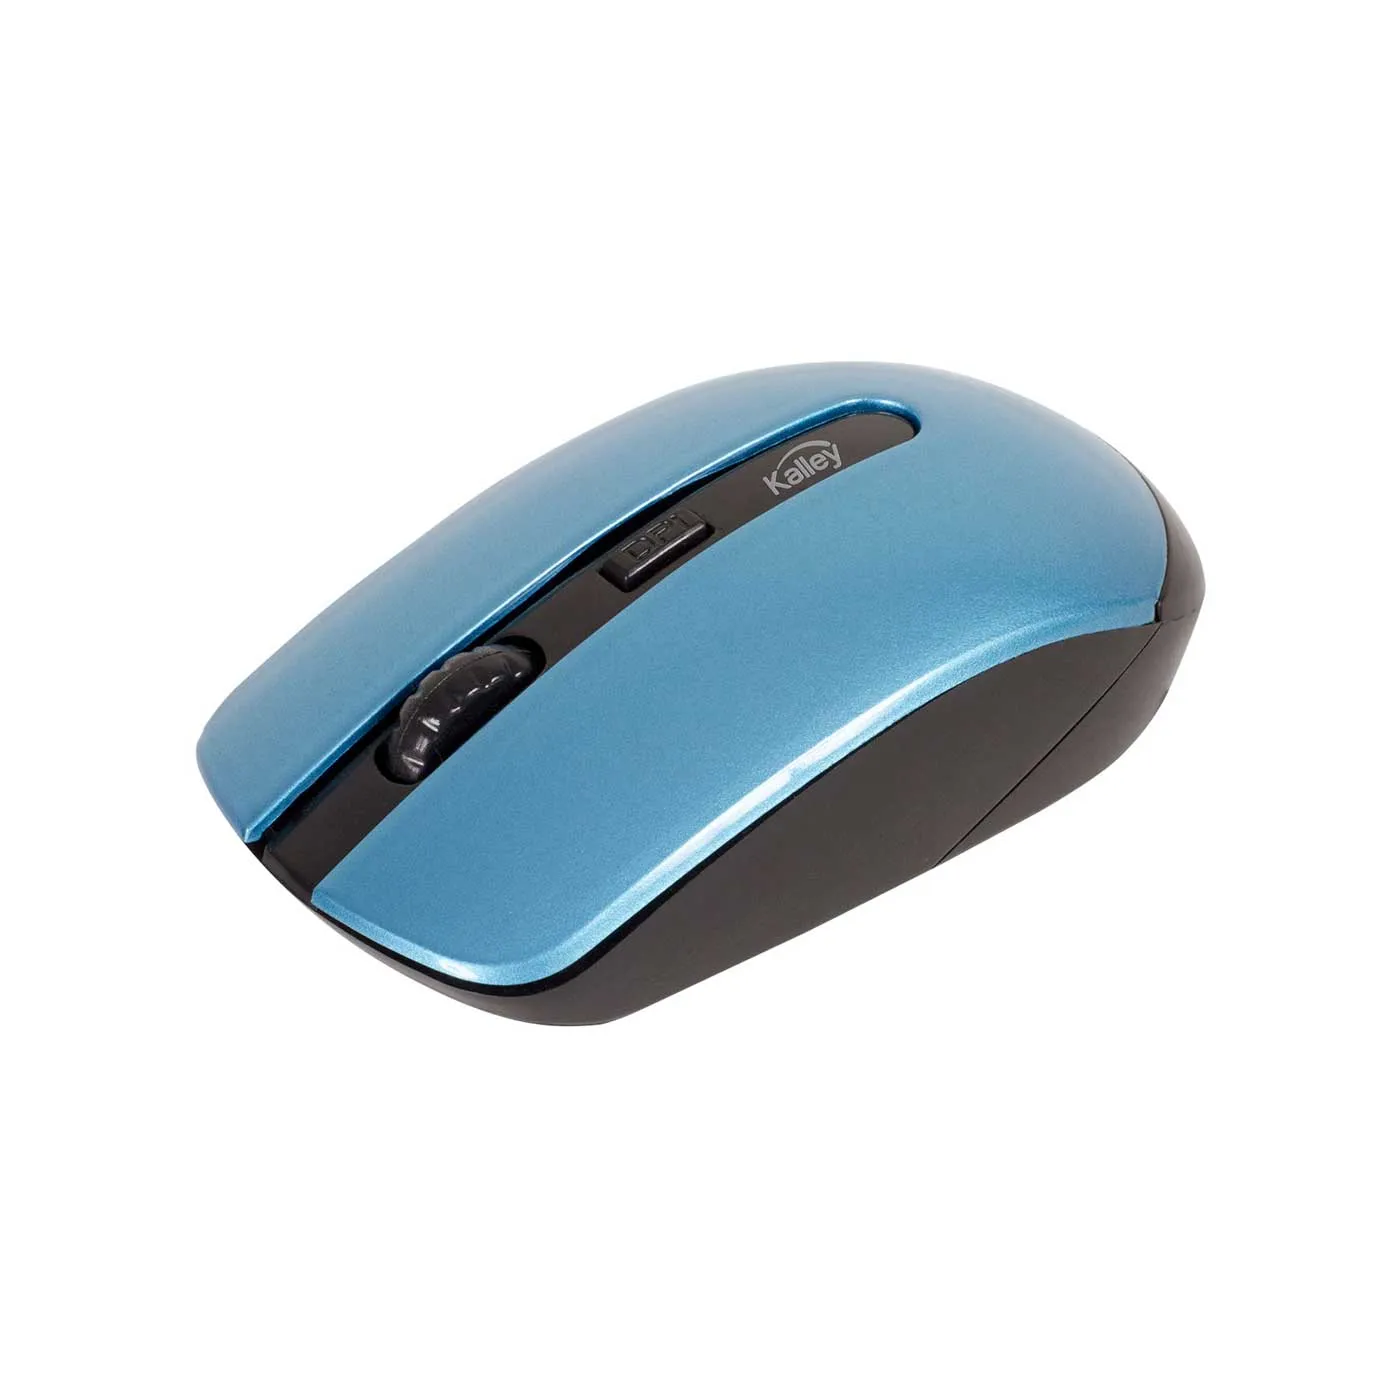 Mouse KALLEY Inalámbrico Óptico USB Azul